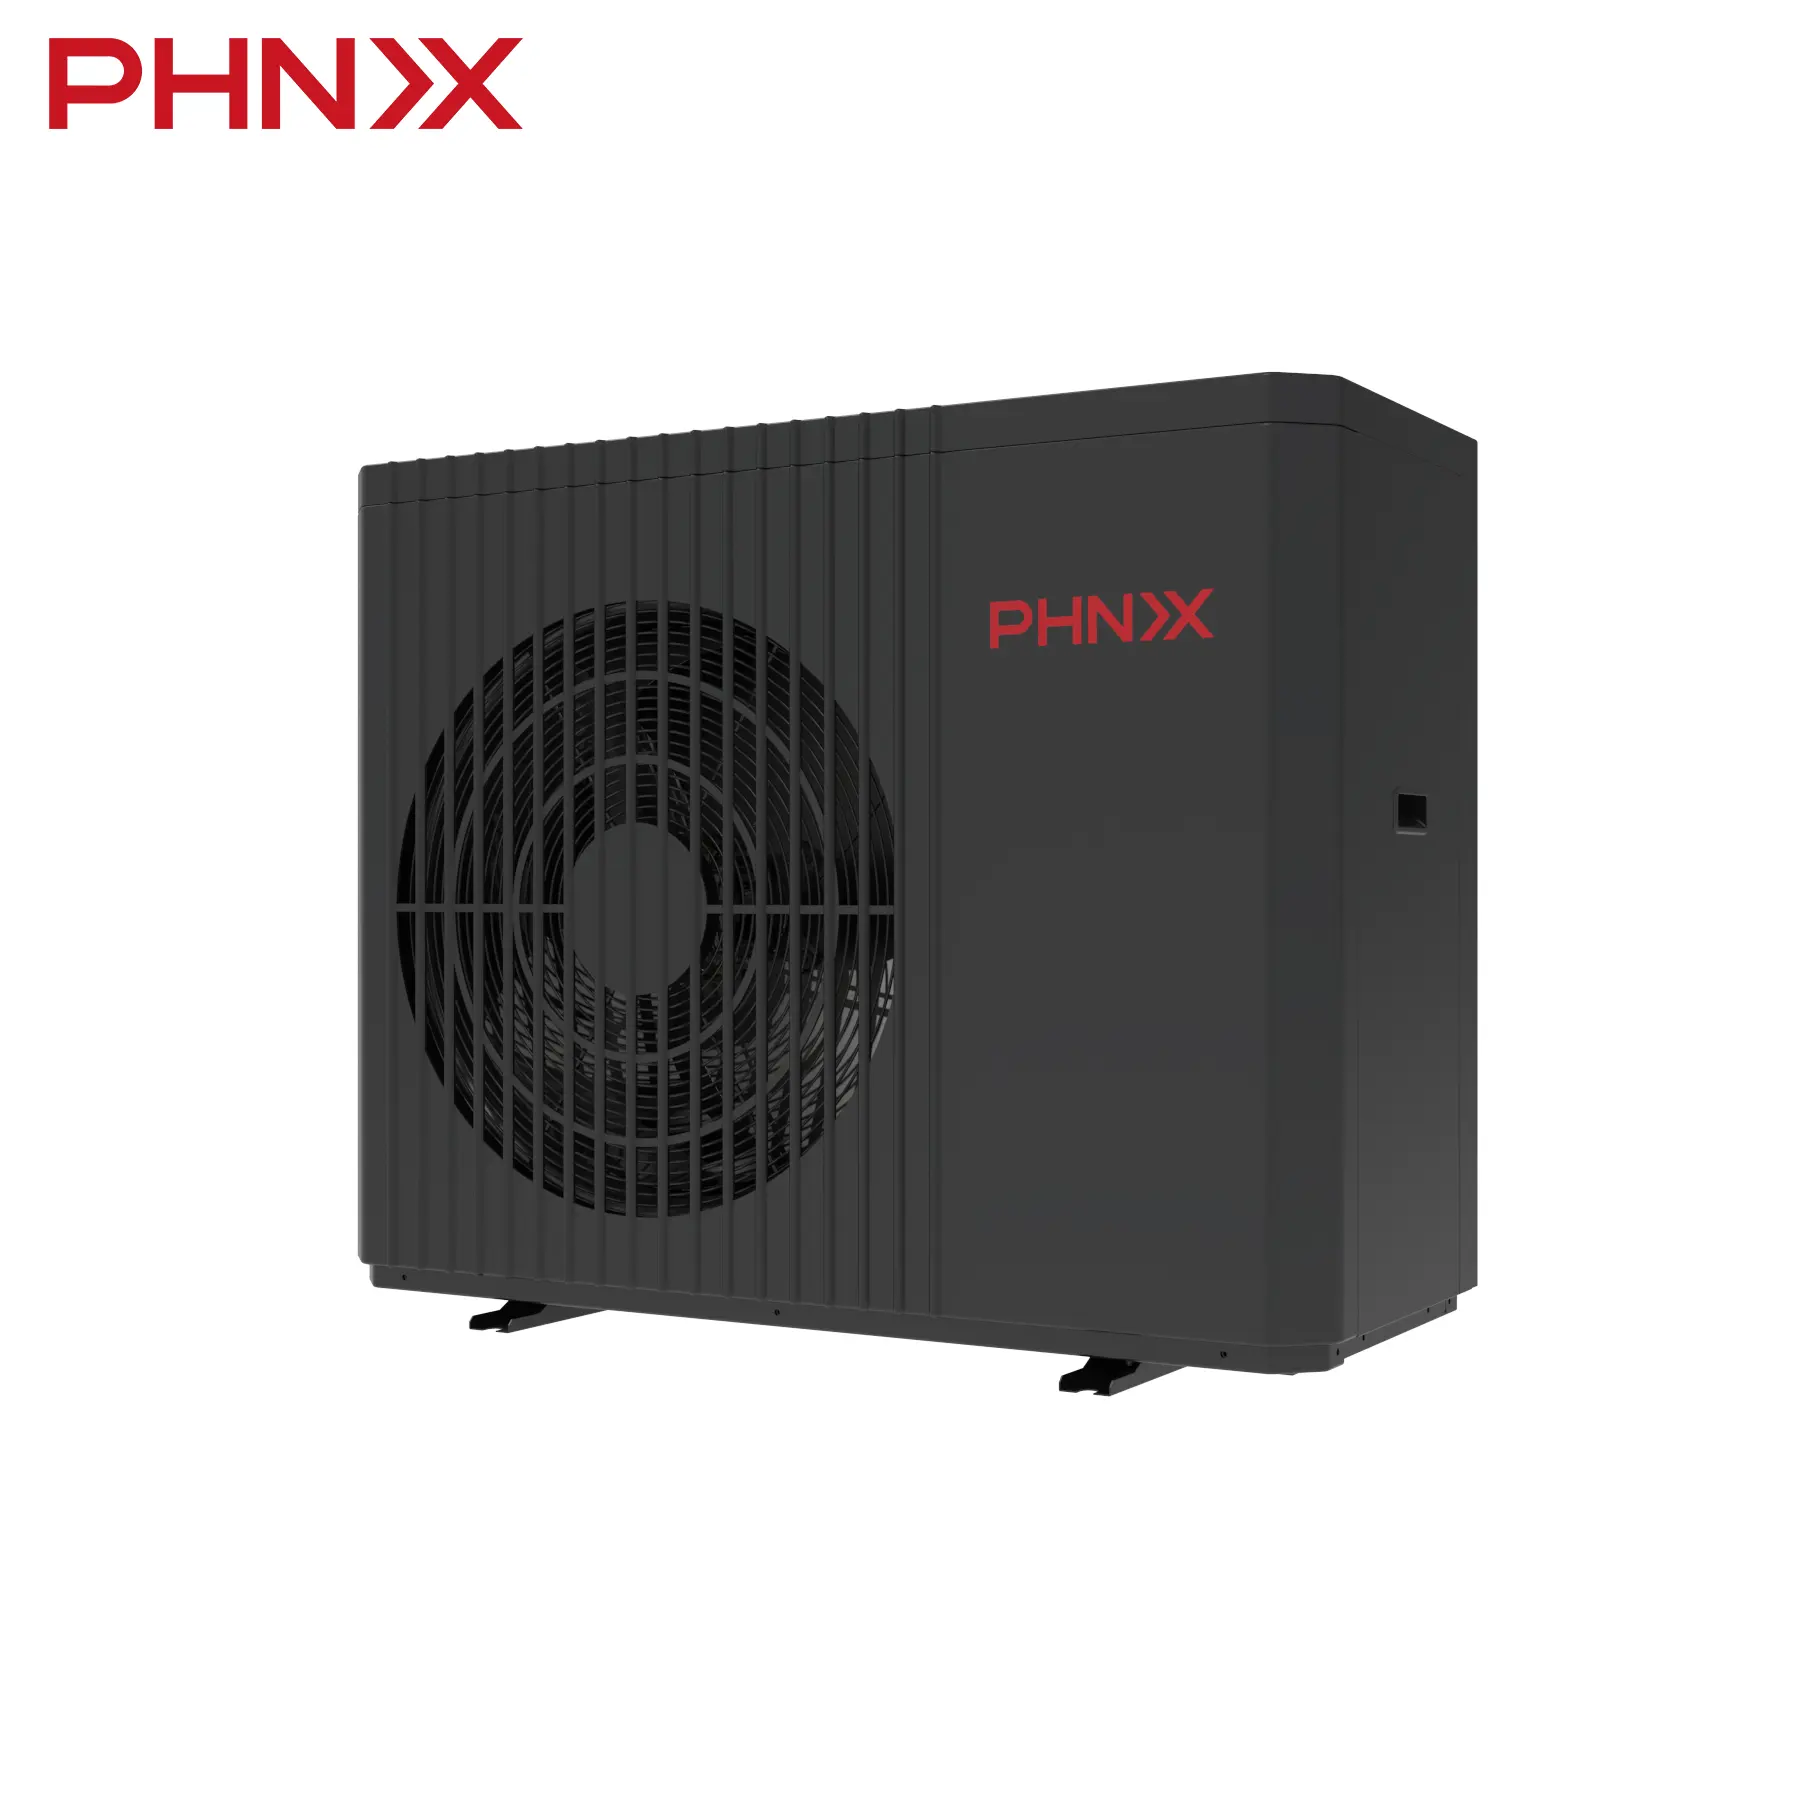 Phnix bomba de calor, bomba de calor de alta eficiência r32 a + +